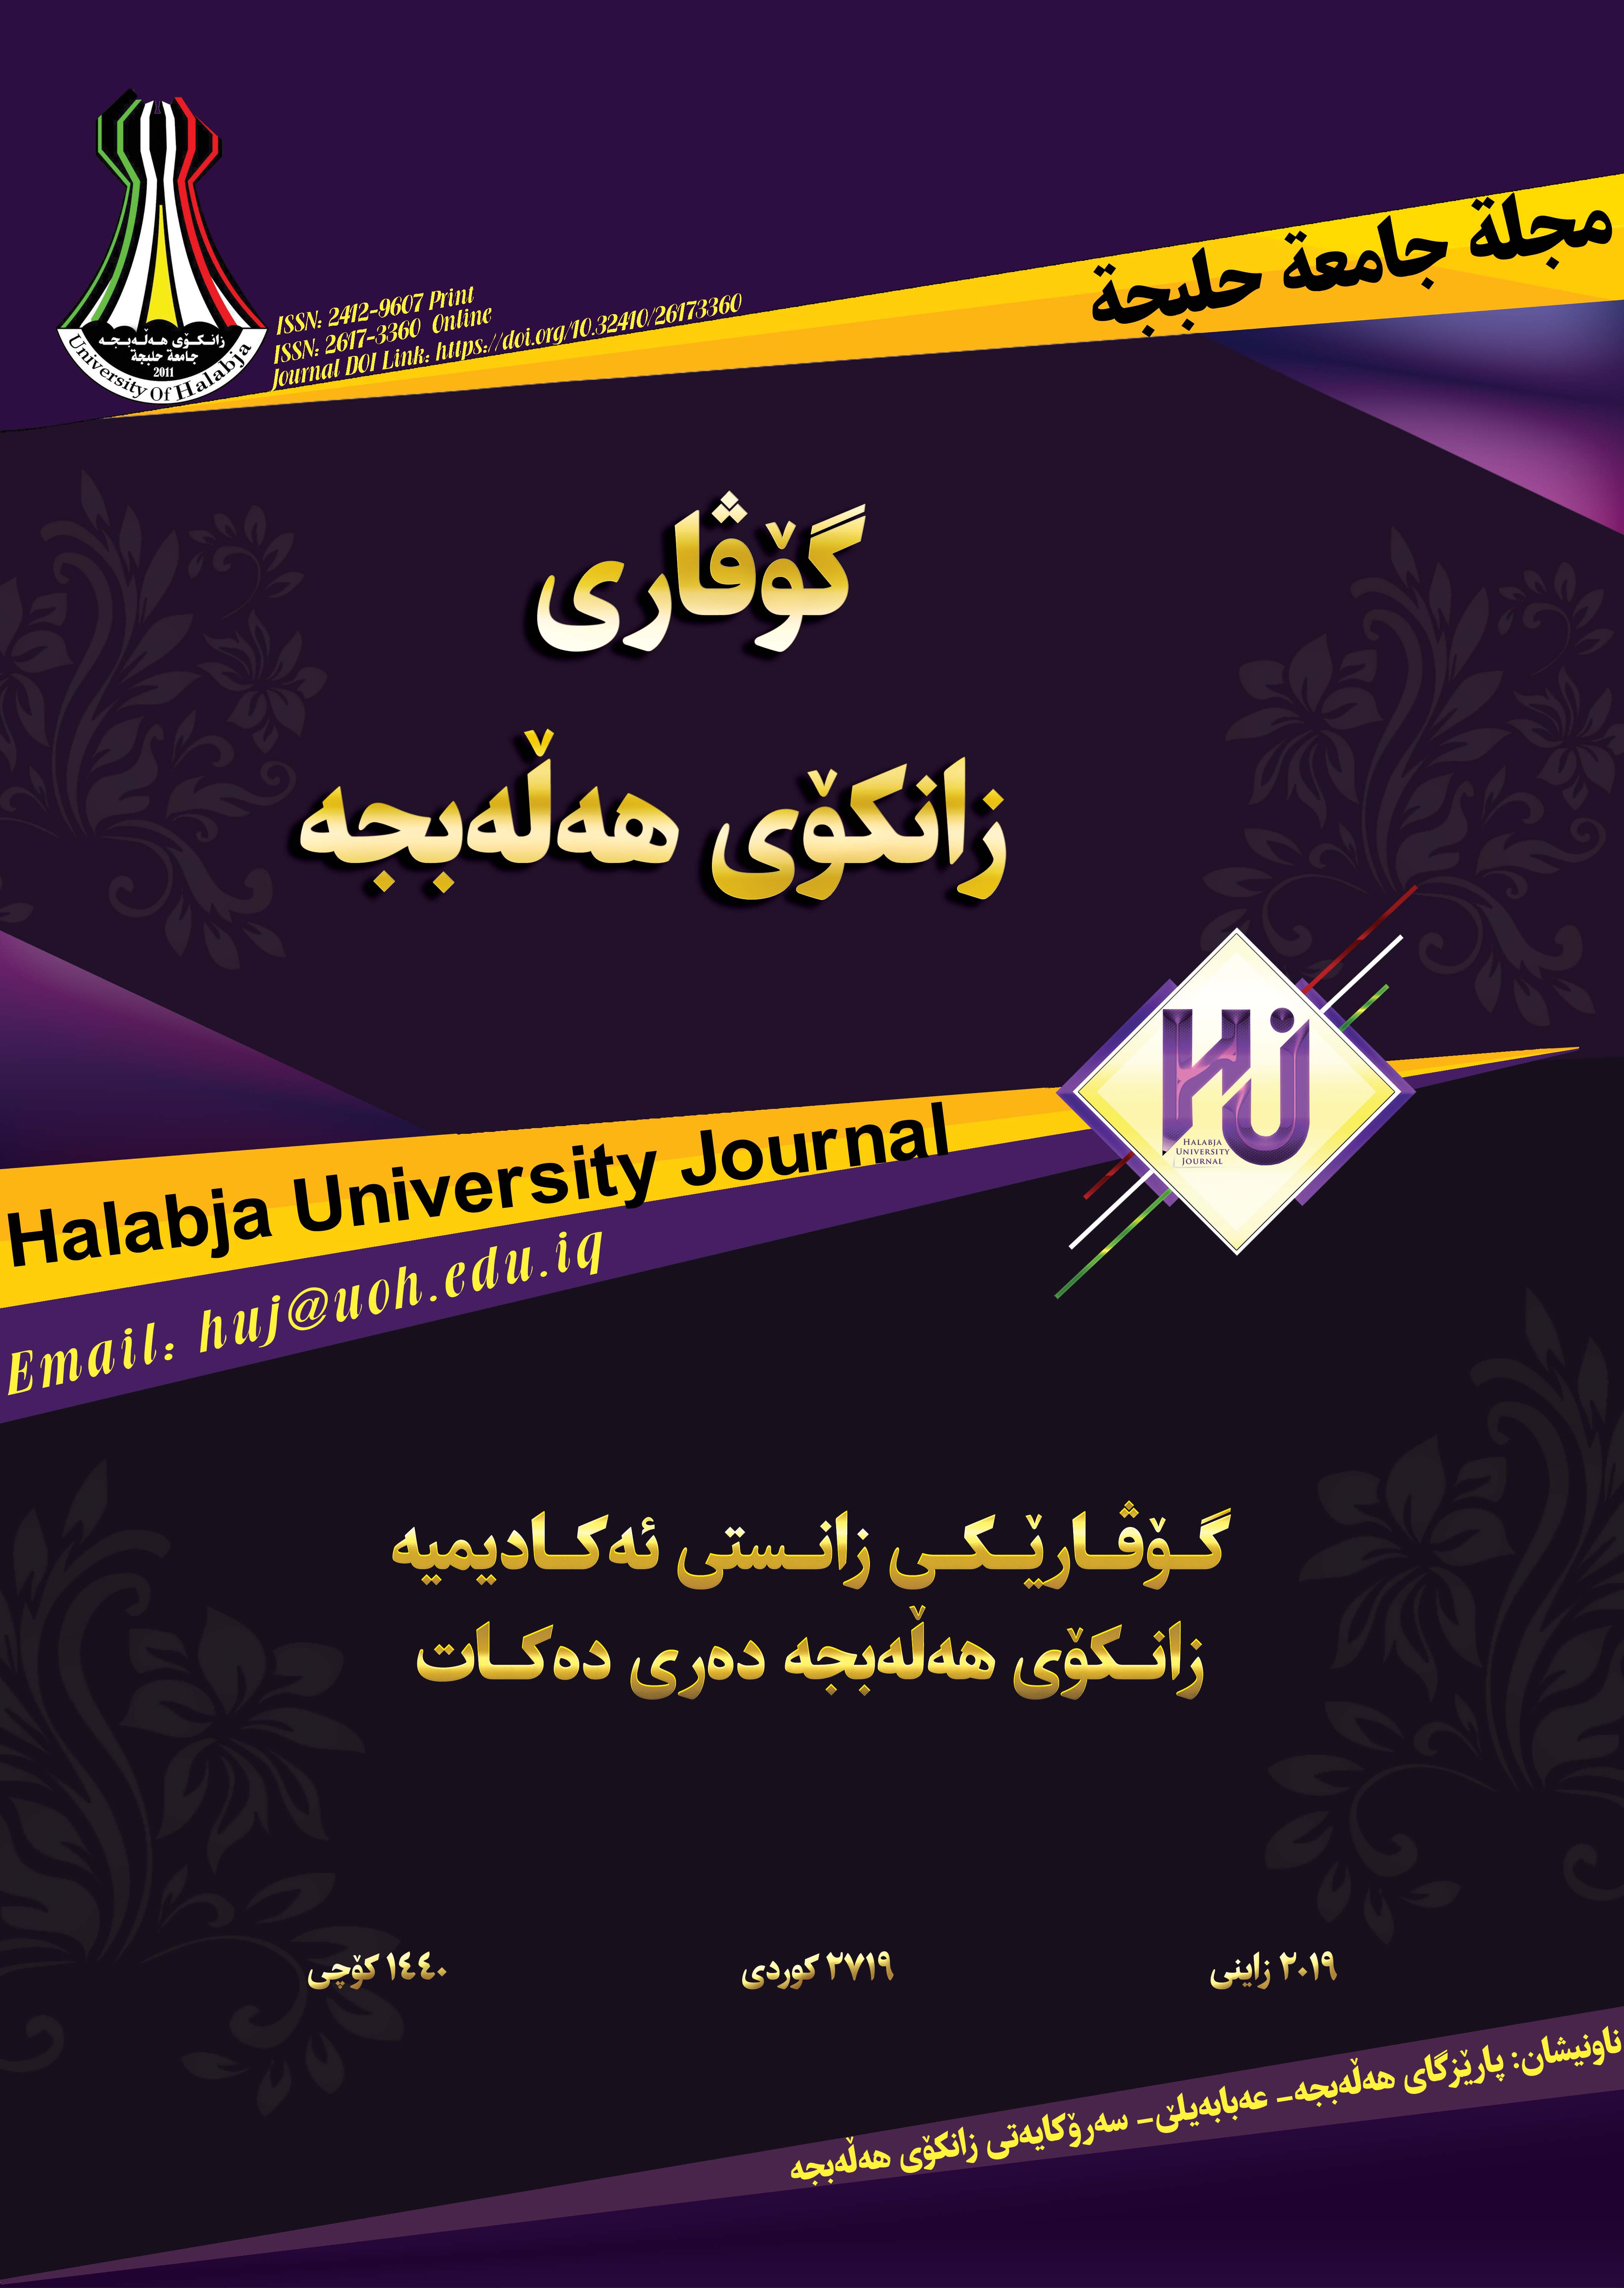 Halabja University Journal